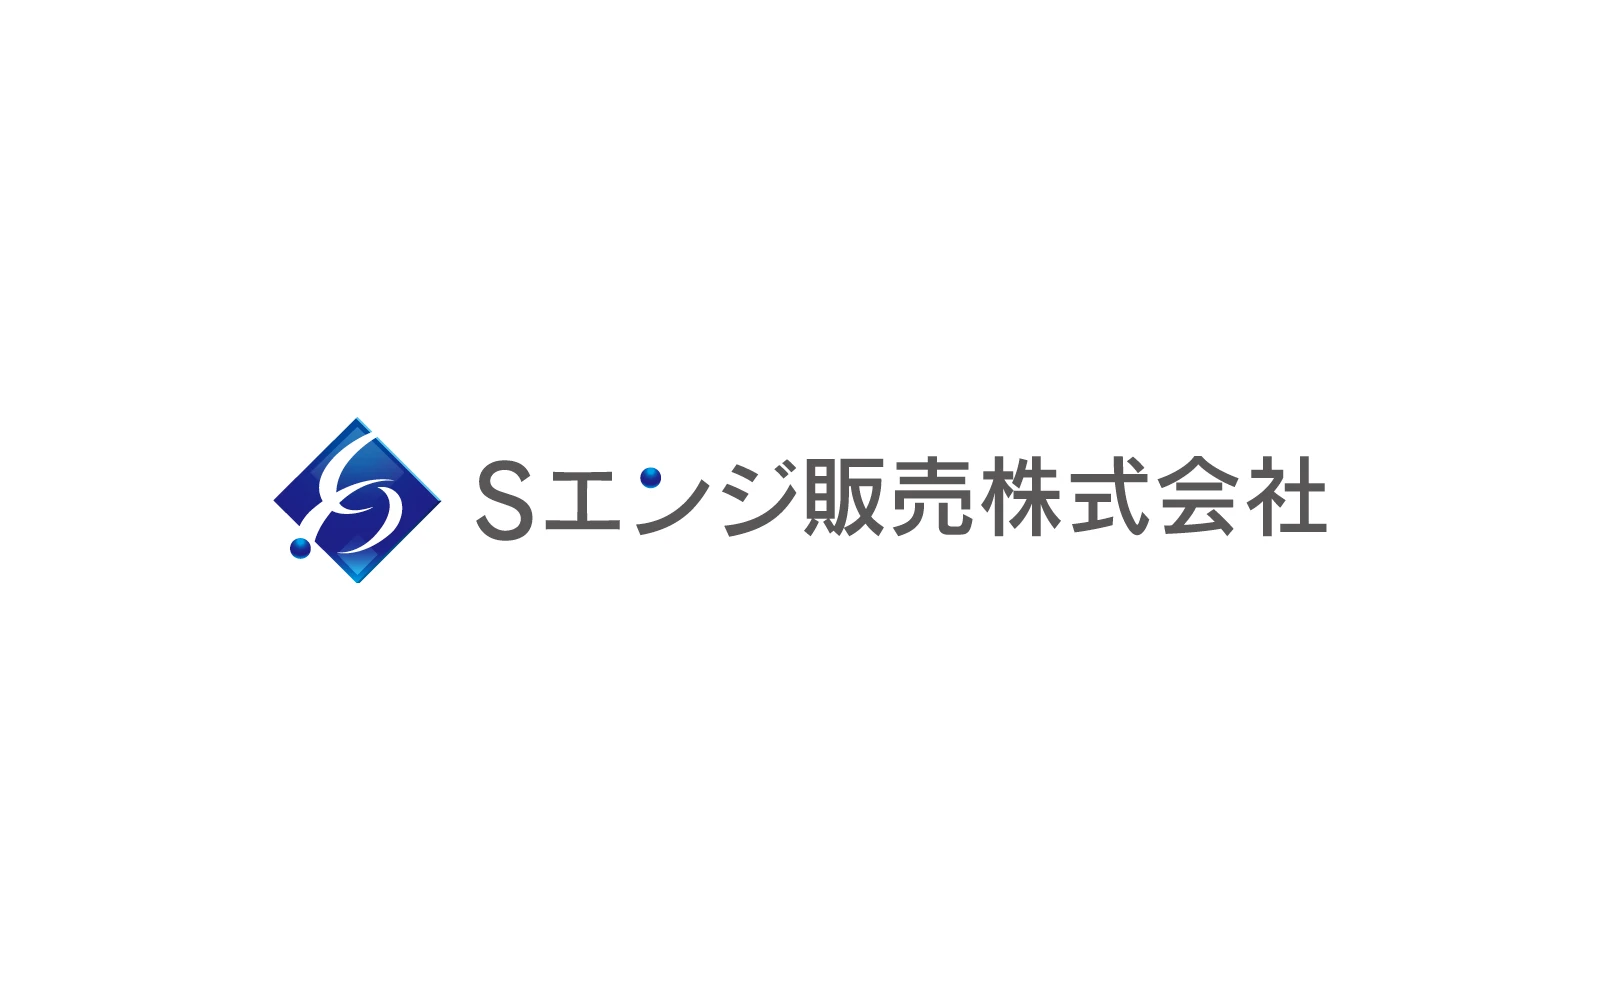 Sエンジ販売株式会社 / コーポレートロゴデザイン